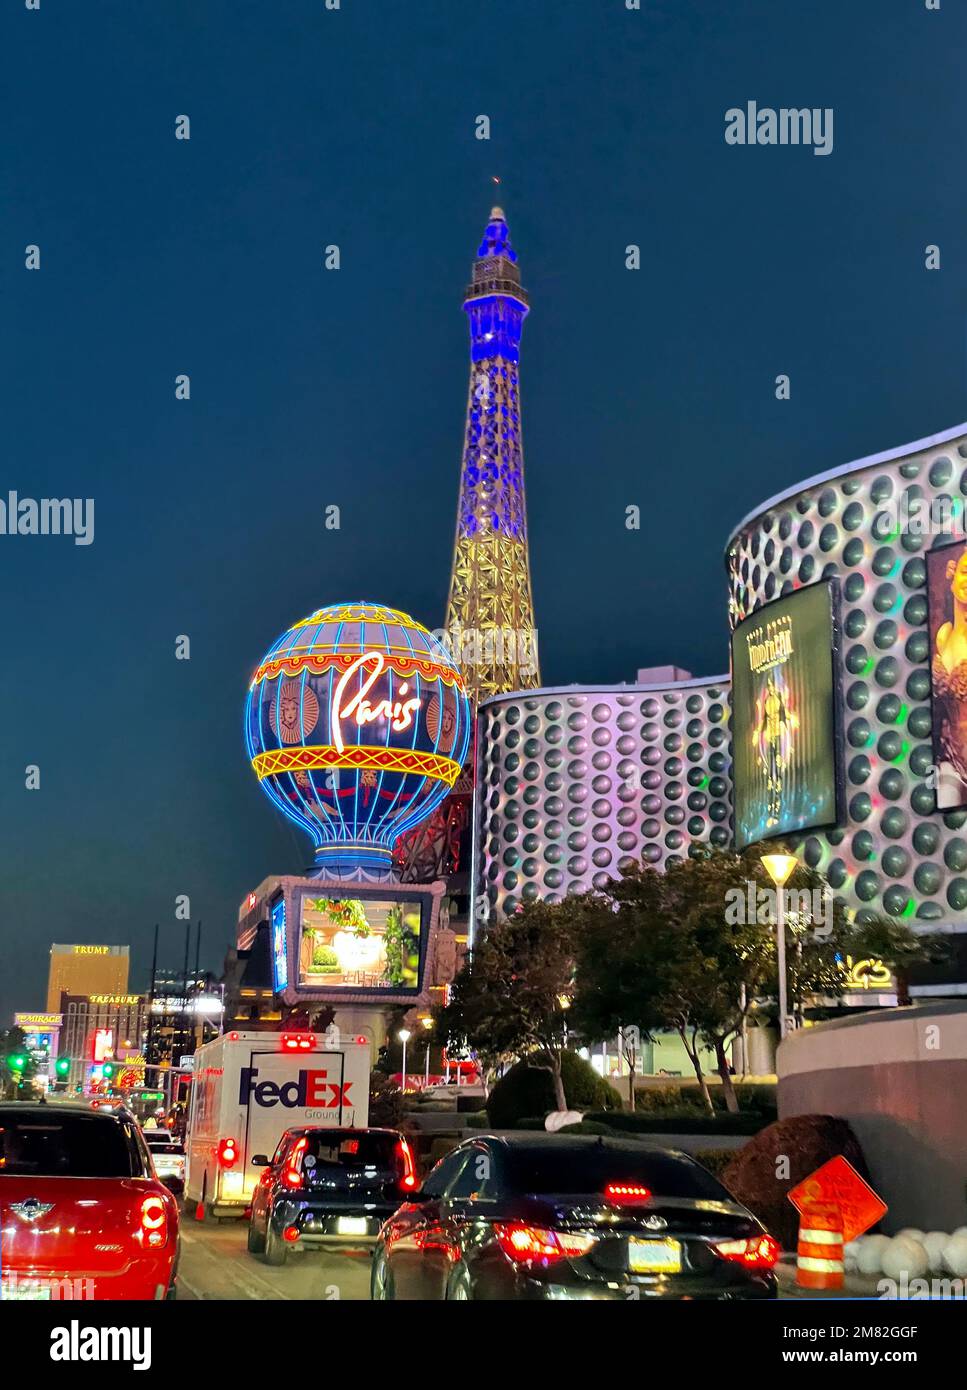 FedEx-Truck auf dem Strip nahe dem Paris Hotel, Casino, Las Vegas, Nevada, Eiffelturm, Stockfoto